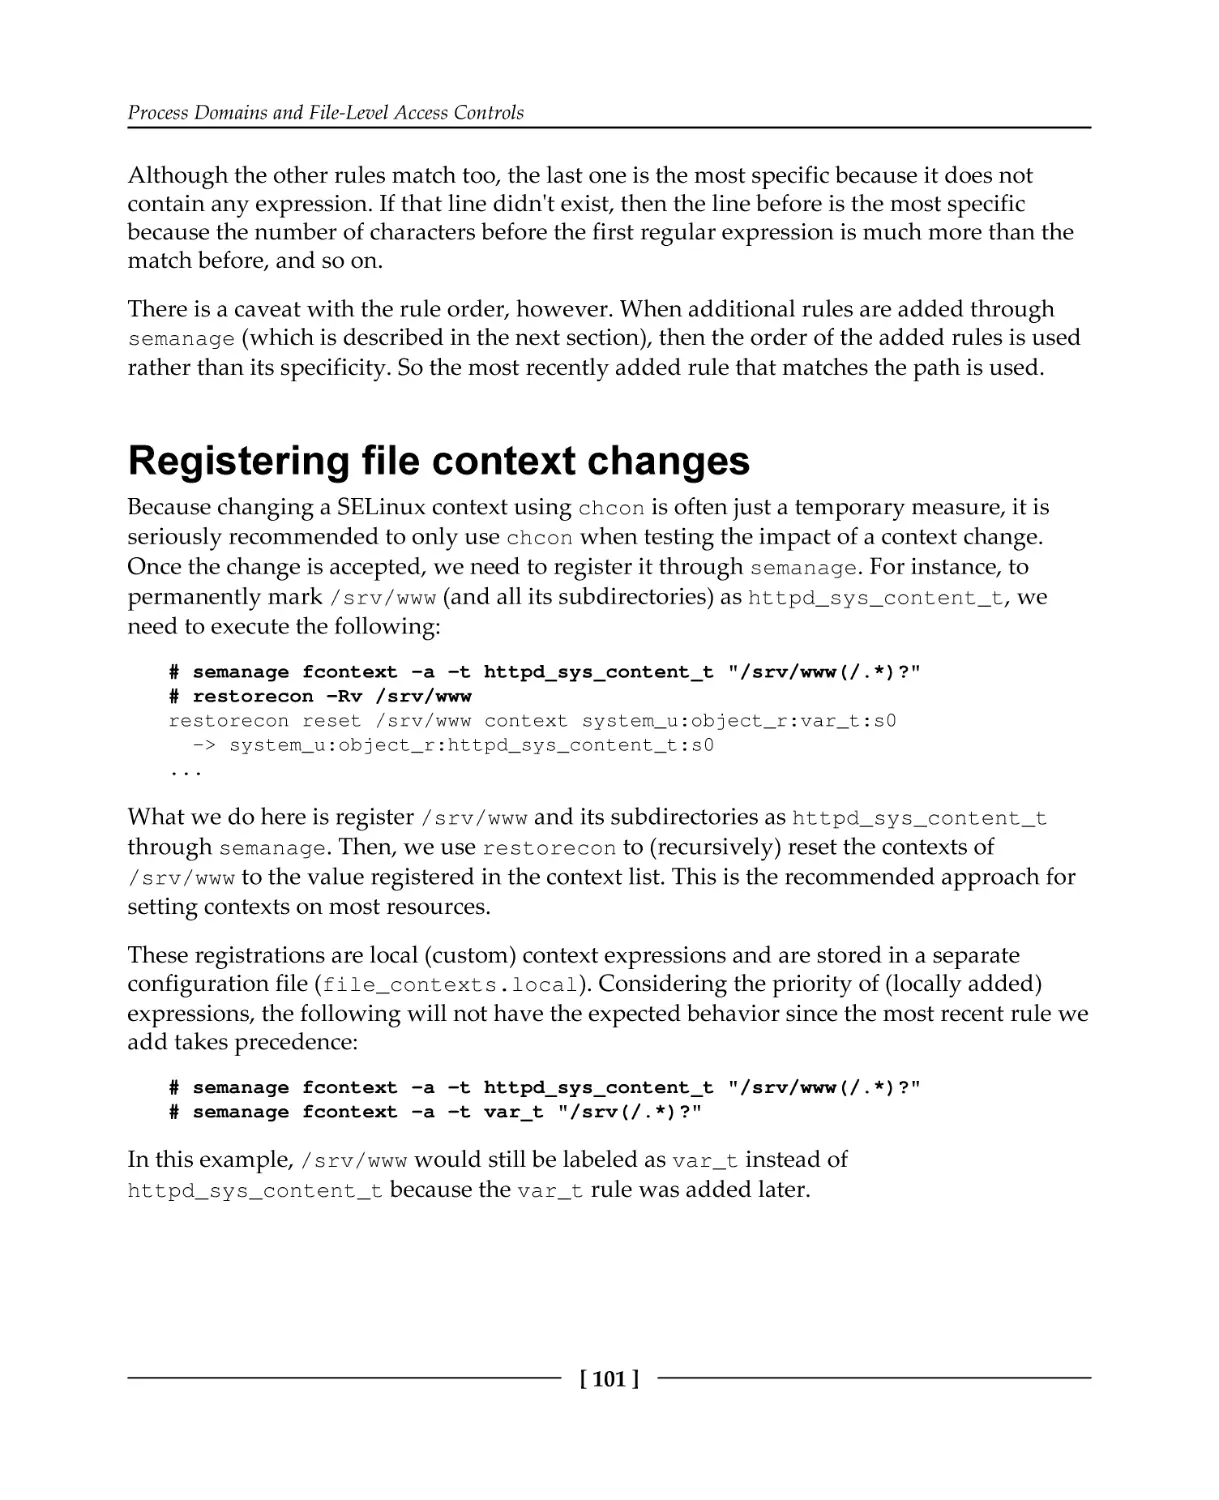 Registering file context changes